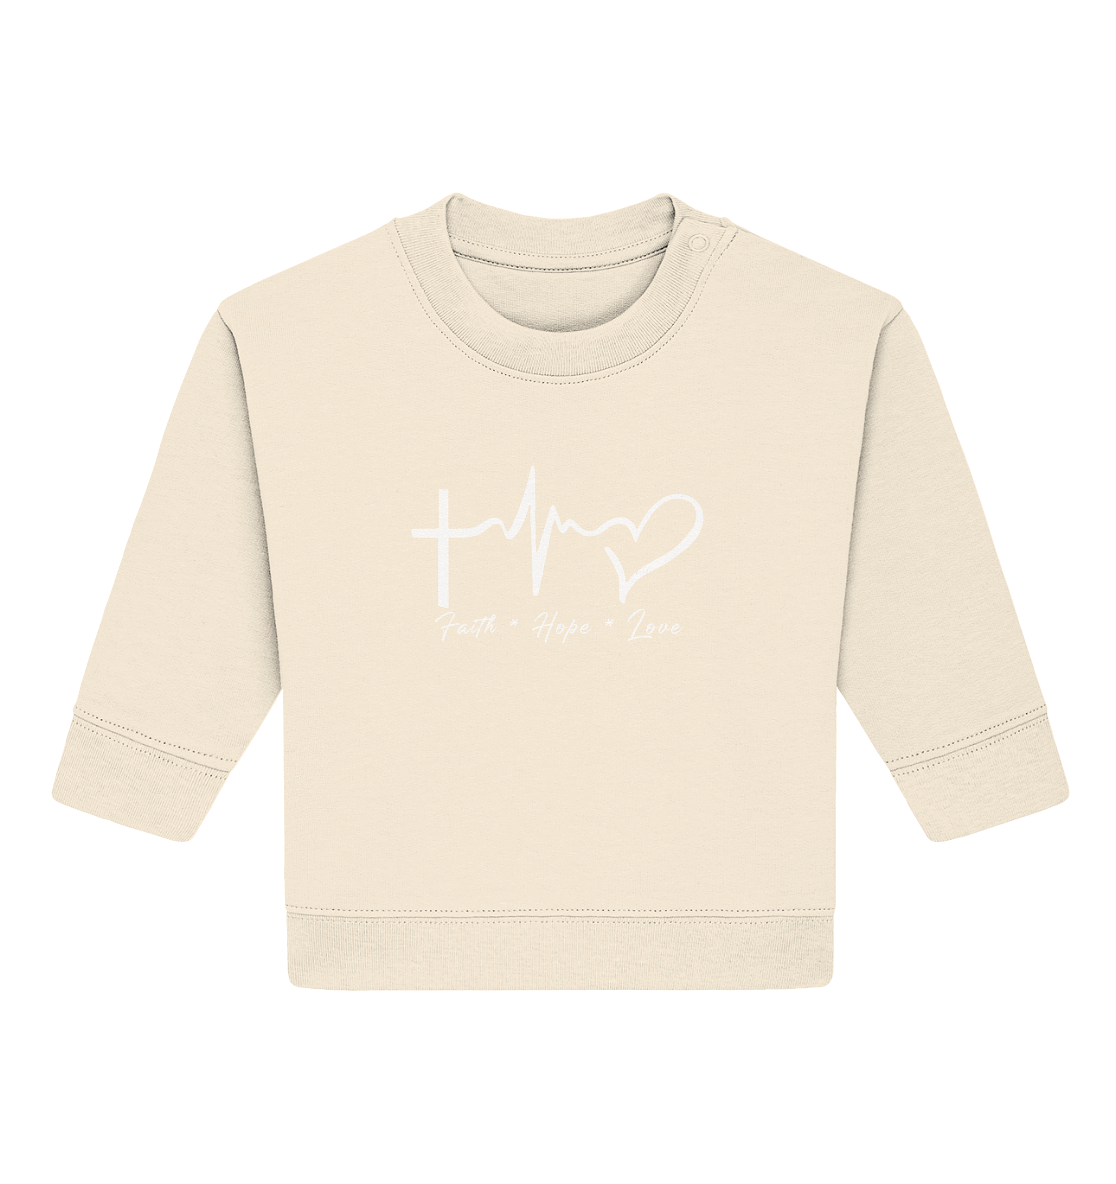 Faith * Hope * Love - Baby Organic Sweatshirt